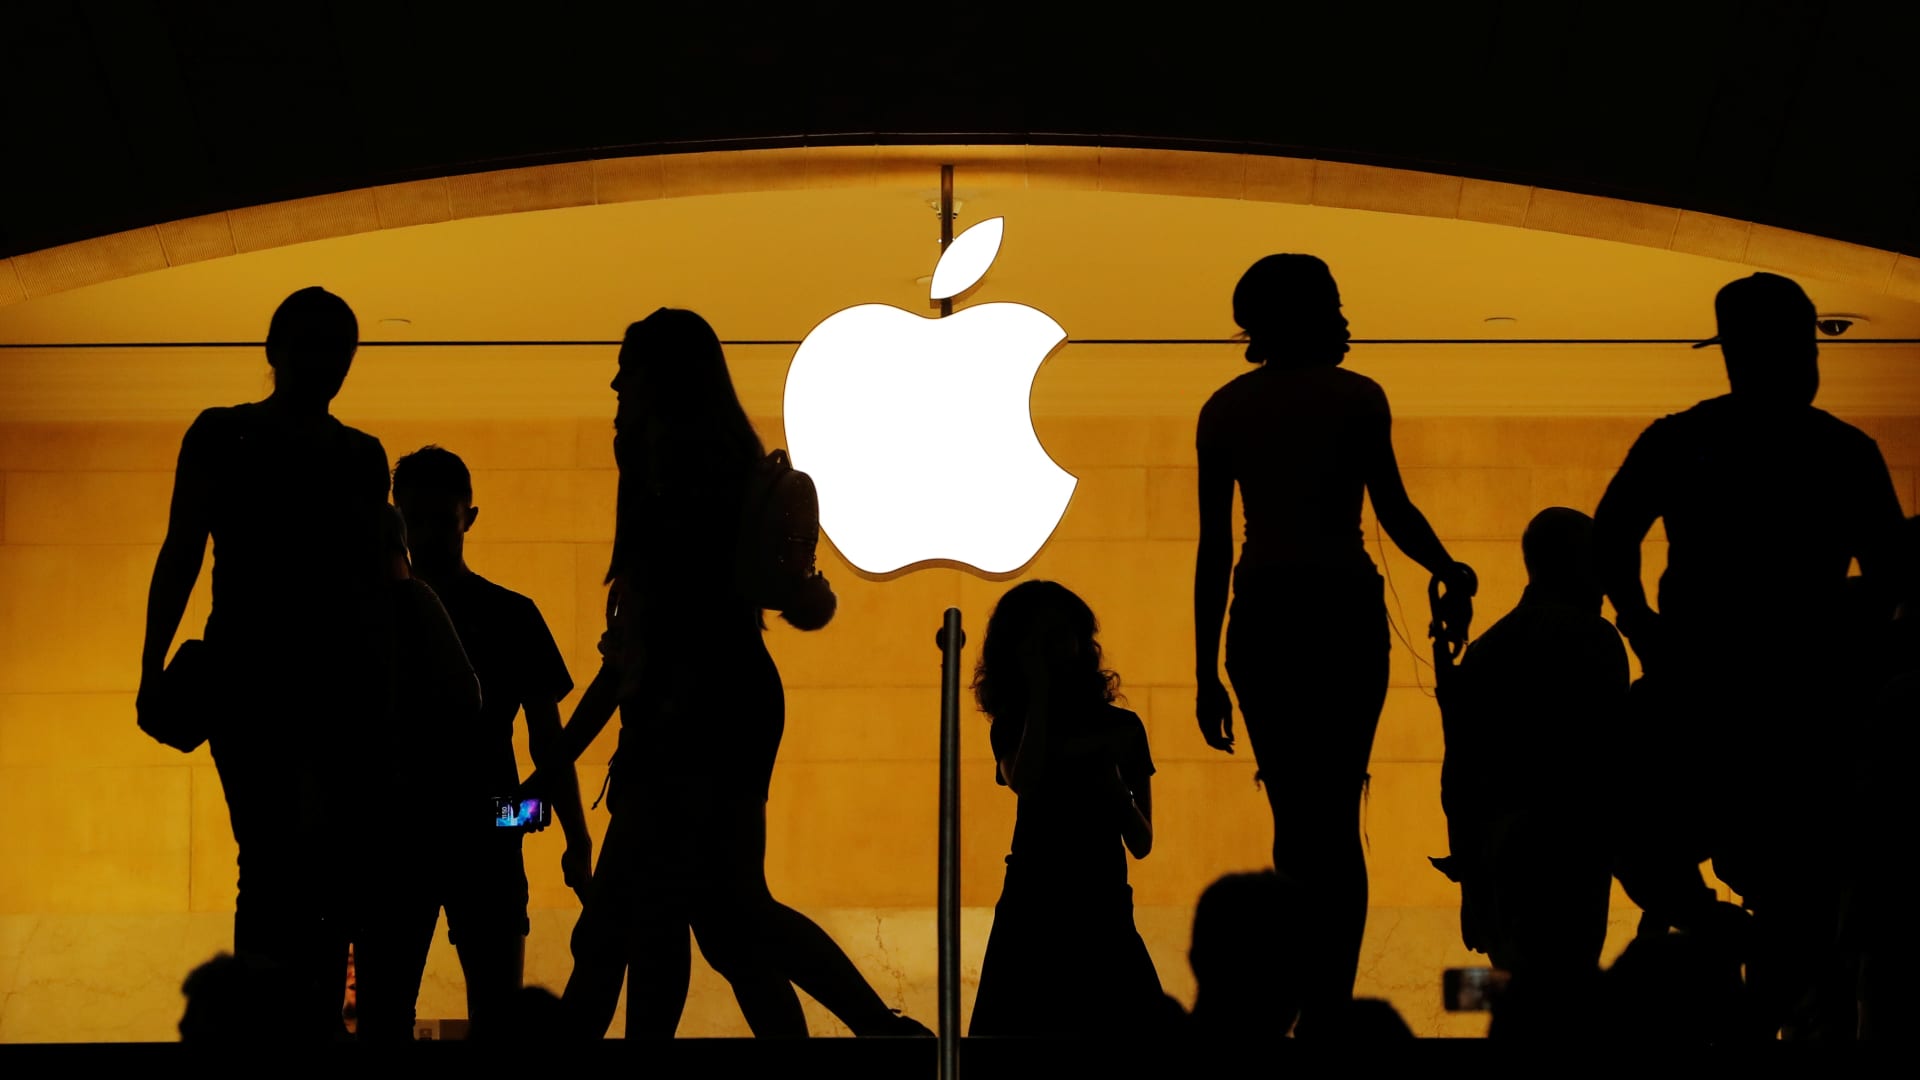 Apple’s near-term future looks murky as consumer spending slows, Bernstein says